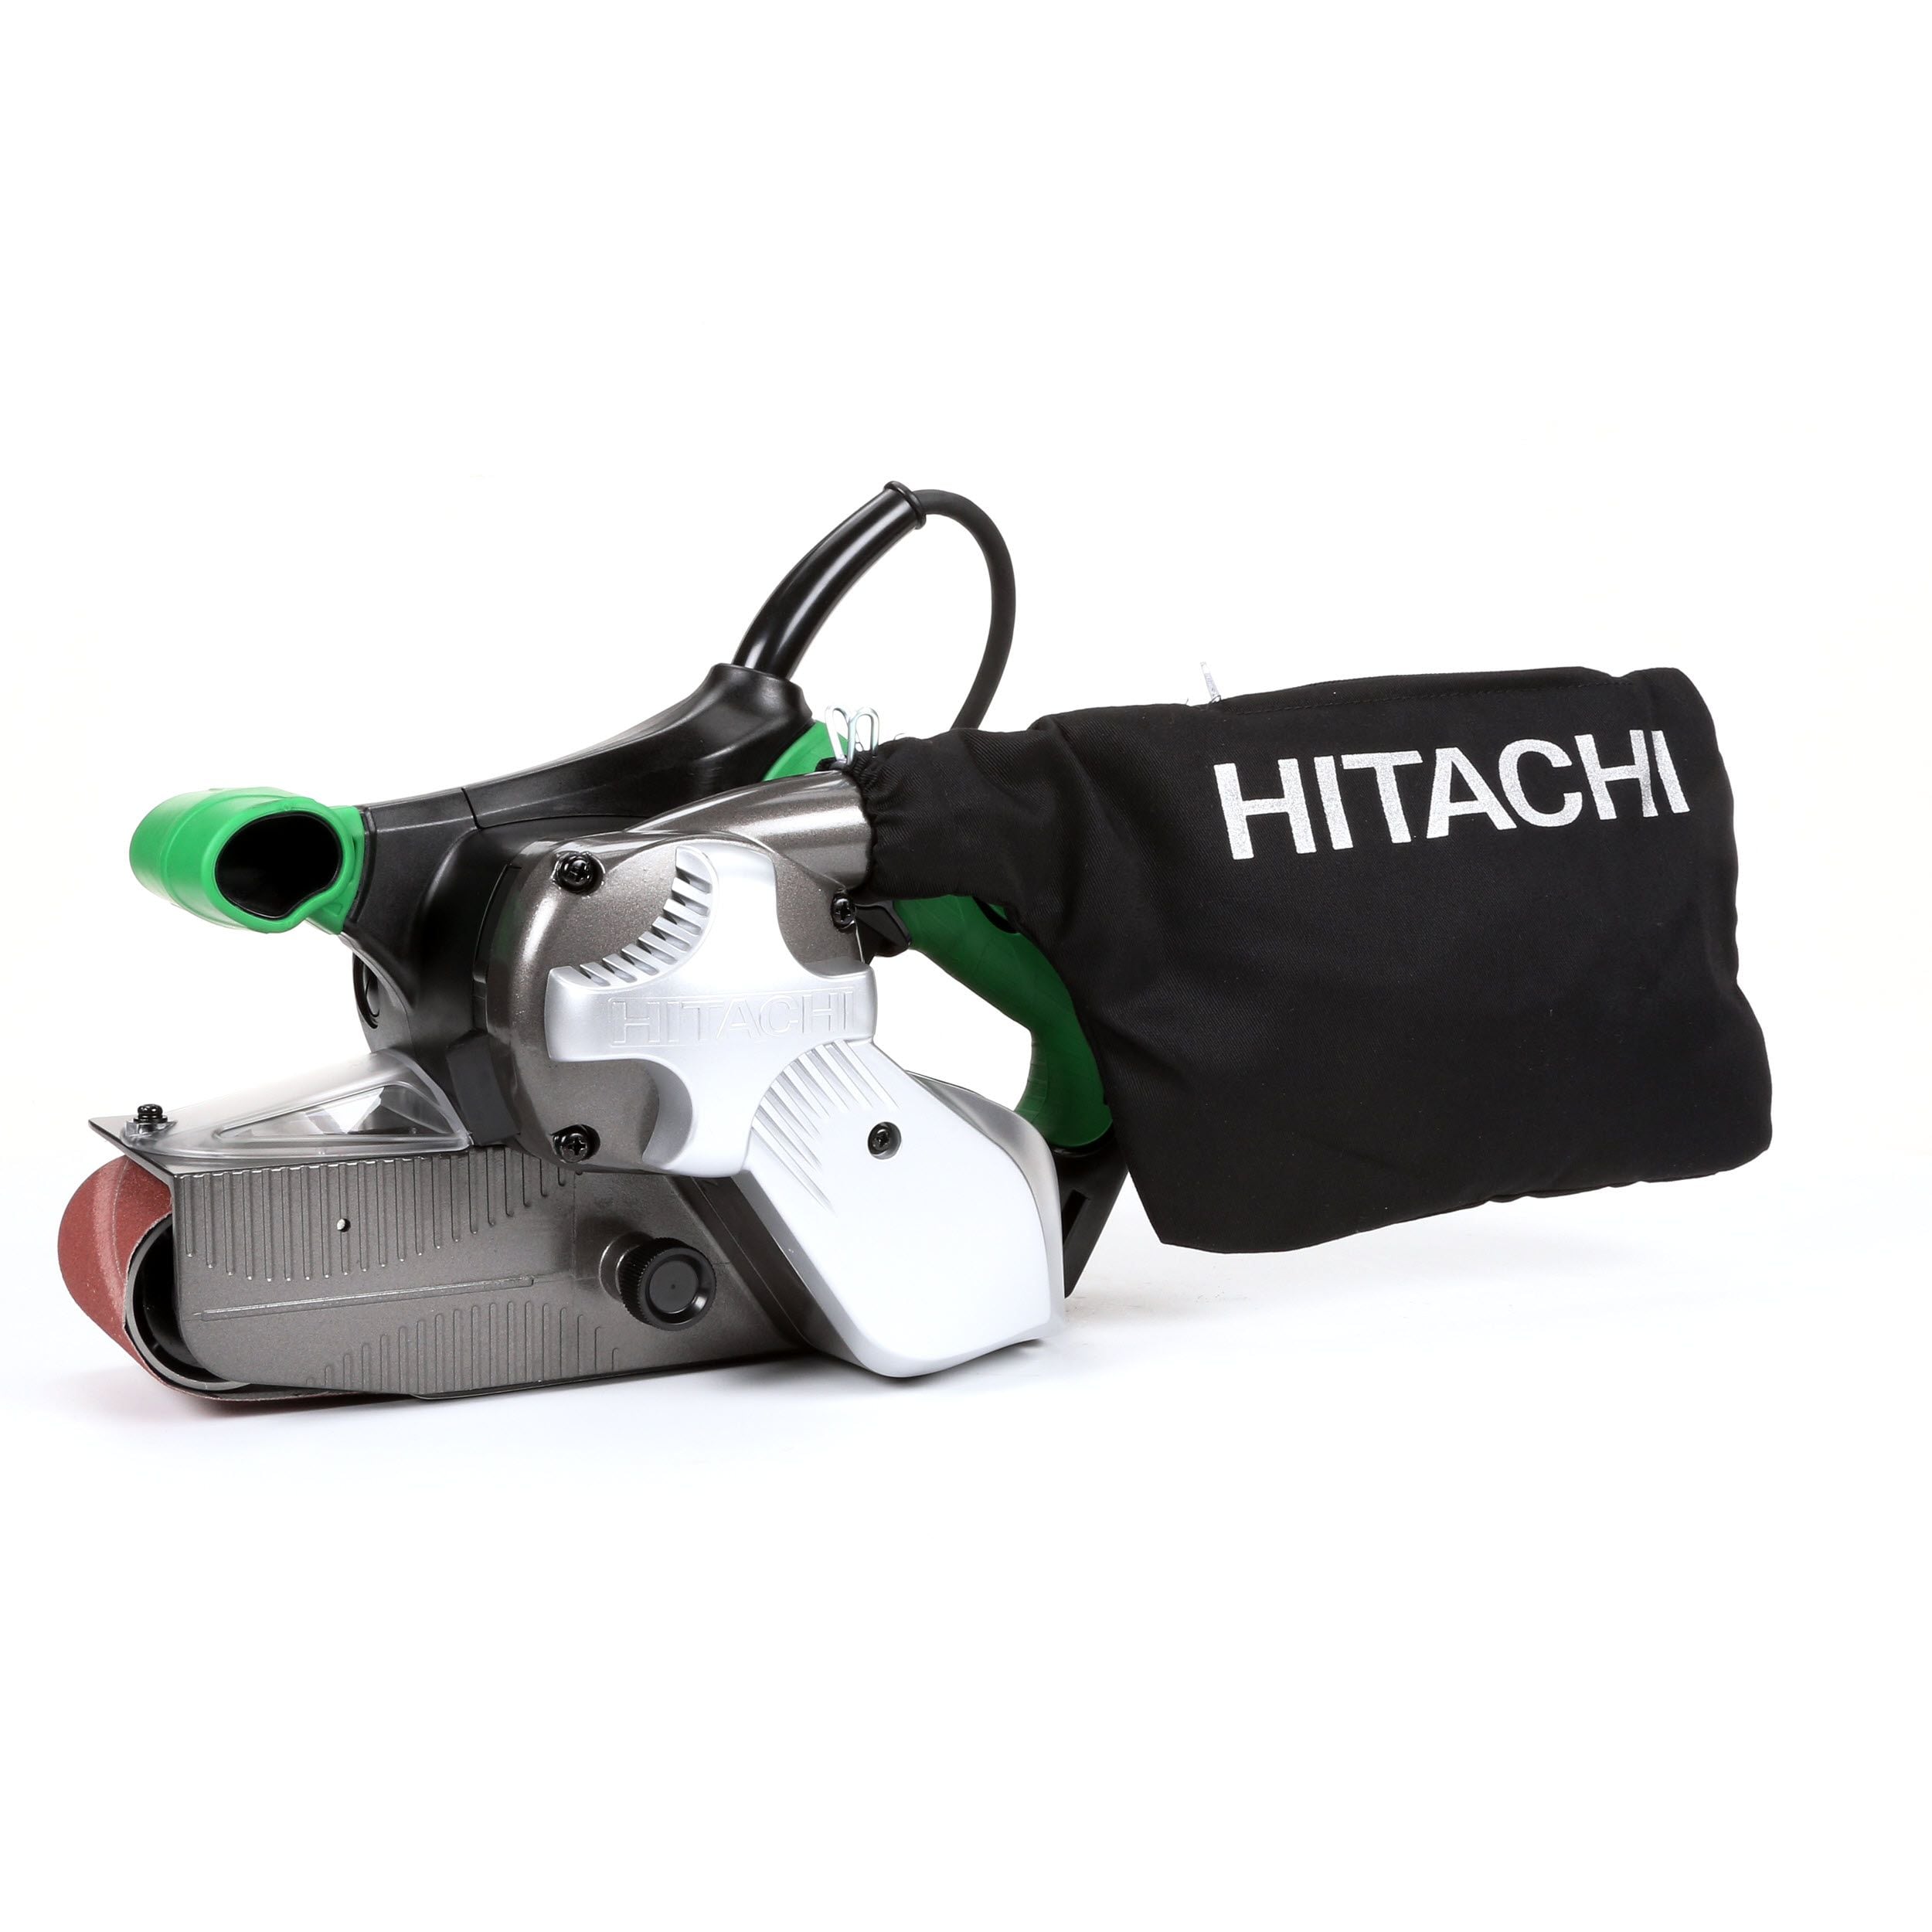 Metabo HPT(was Hitachi Power Tools) 9-Amp Corded Belt Sander 